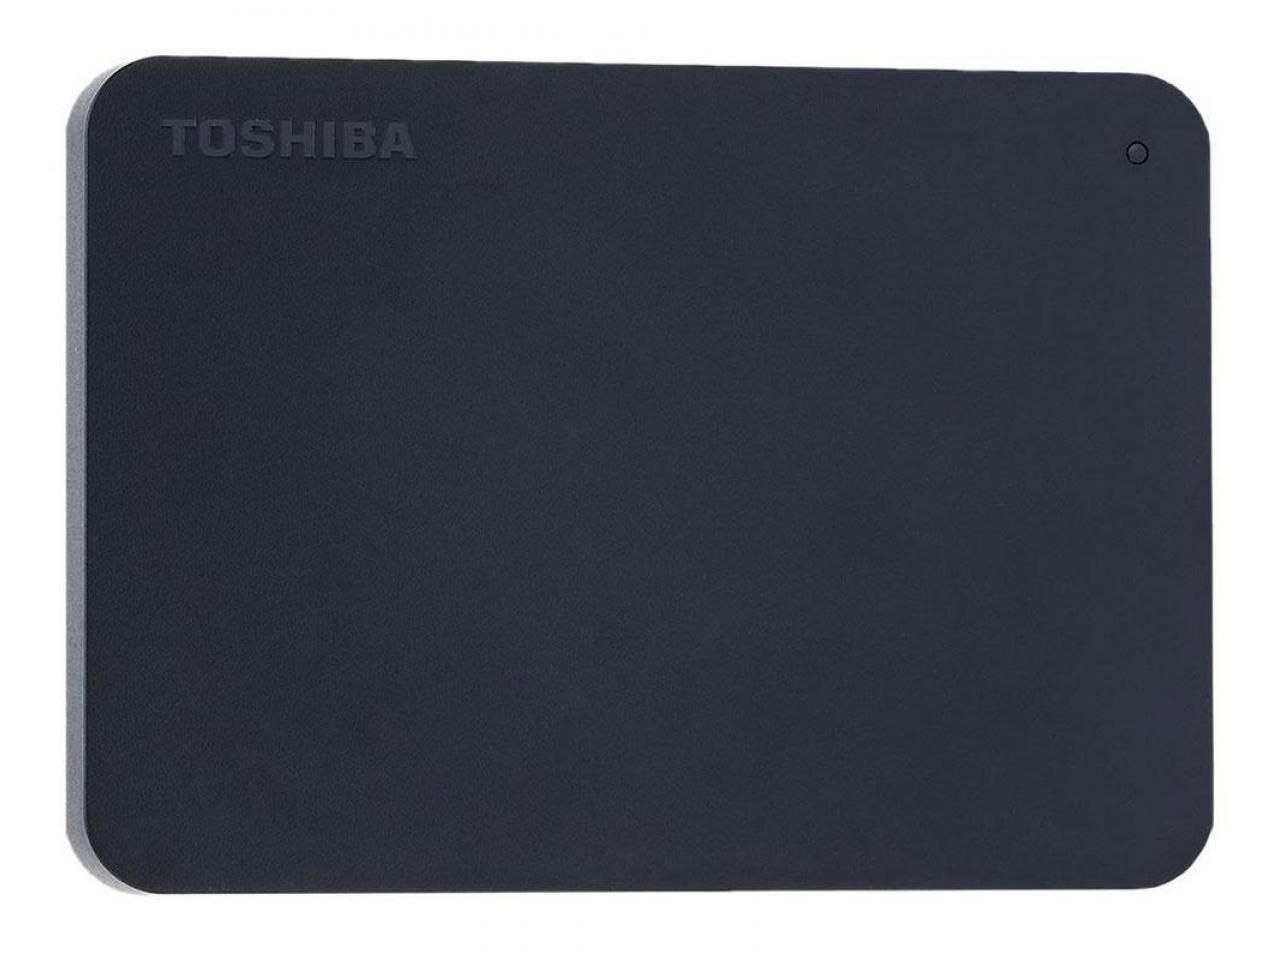 HD Externo Toshiba 2TB Canvio Basics Portátil Externo USB 3.0 Preto HDTB420XK3AA